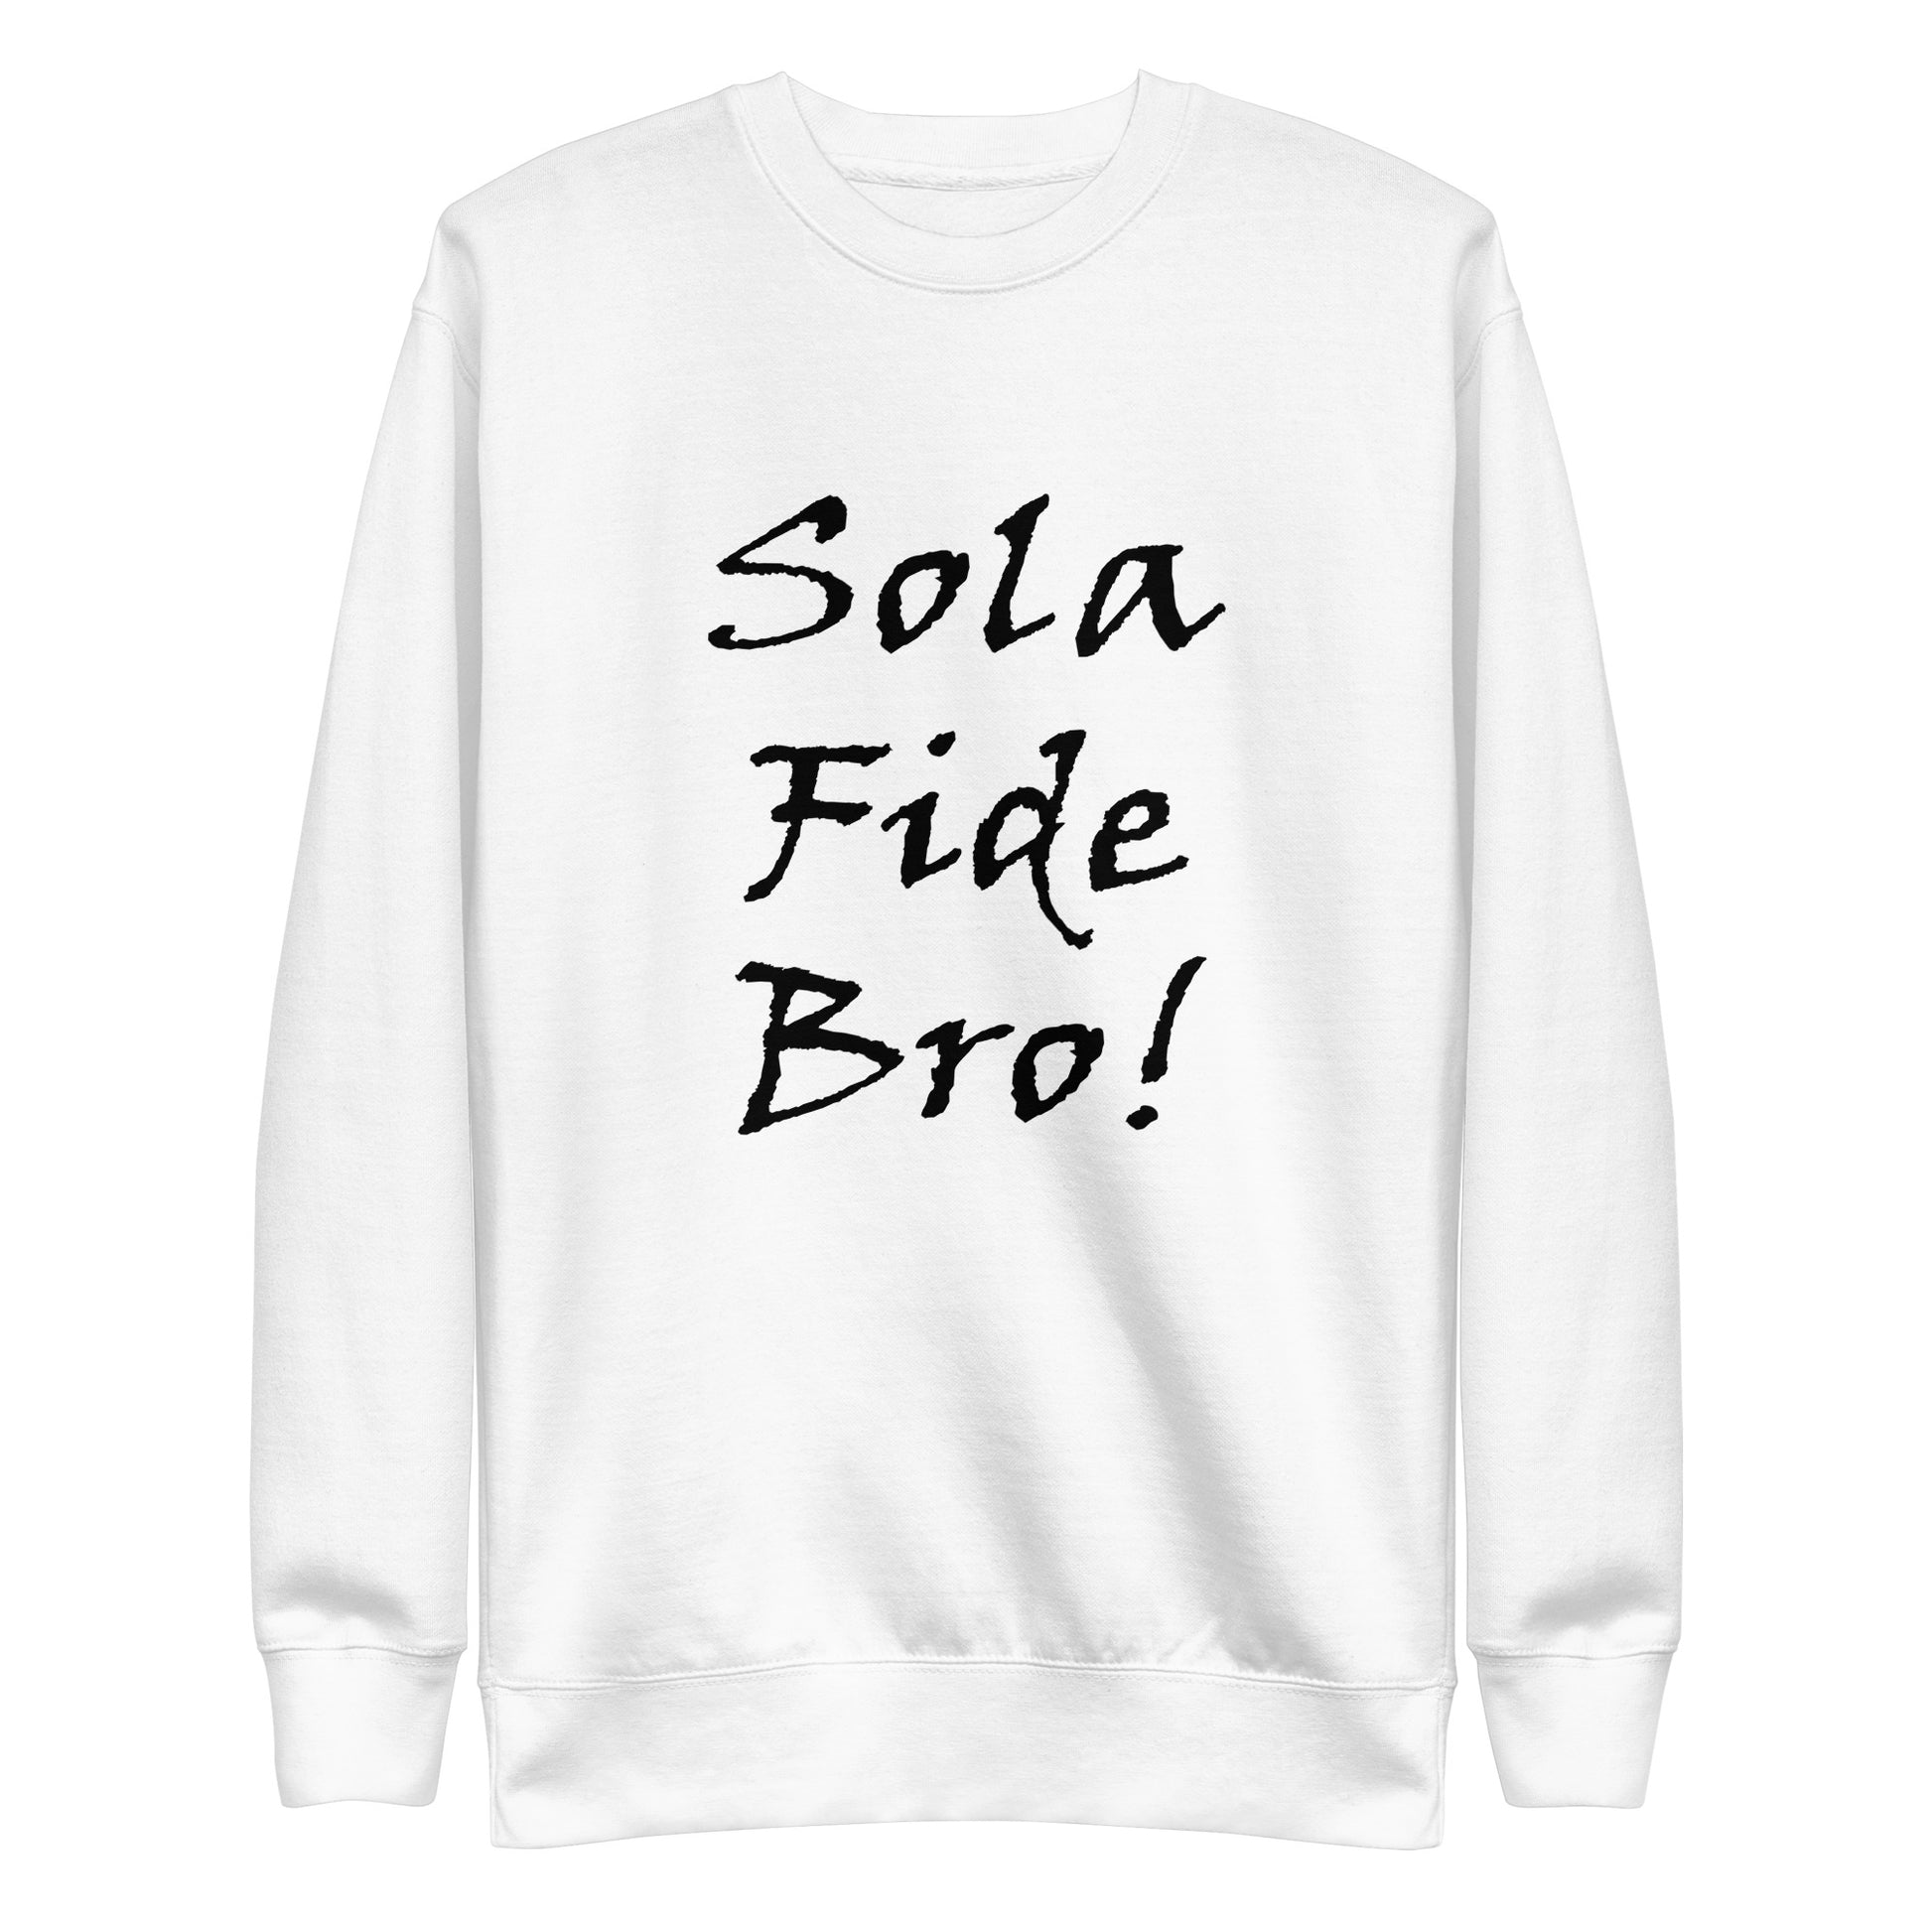 Sola Fida Bro! Unisex Sweatshirt - Solid Rock Designs | Christian Apparel